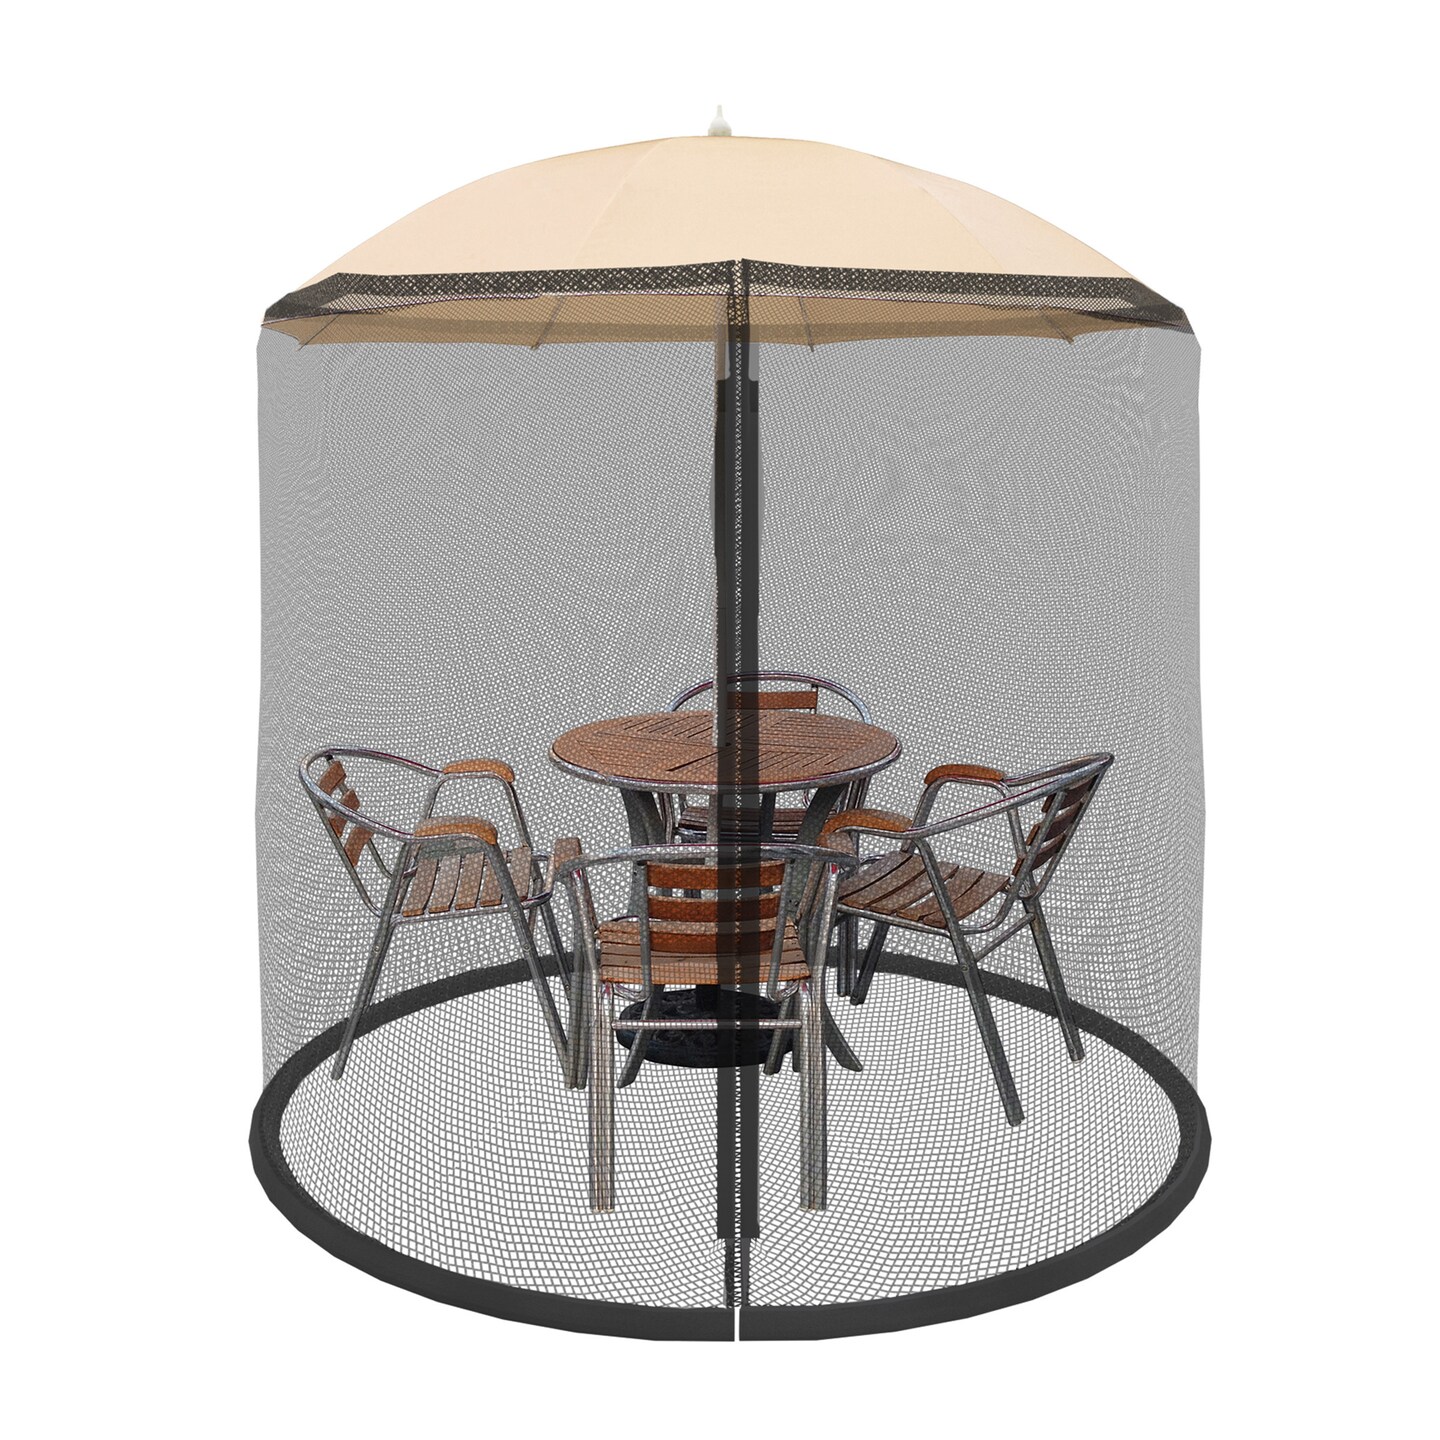 Pure Garden Patio Umbrella Mounted Mesh Bug and Mosquito Screen Fits 7.5 Ft Diameter